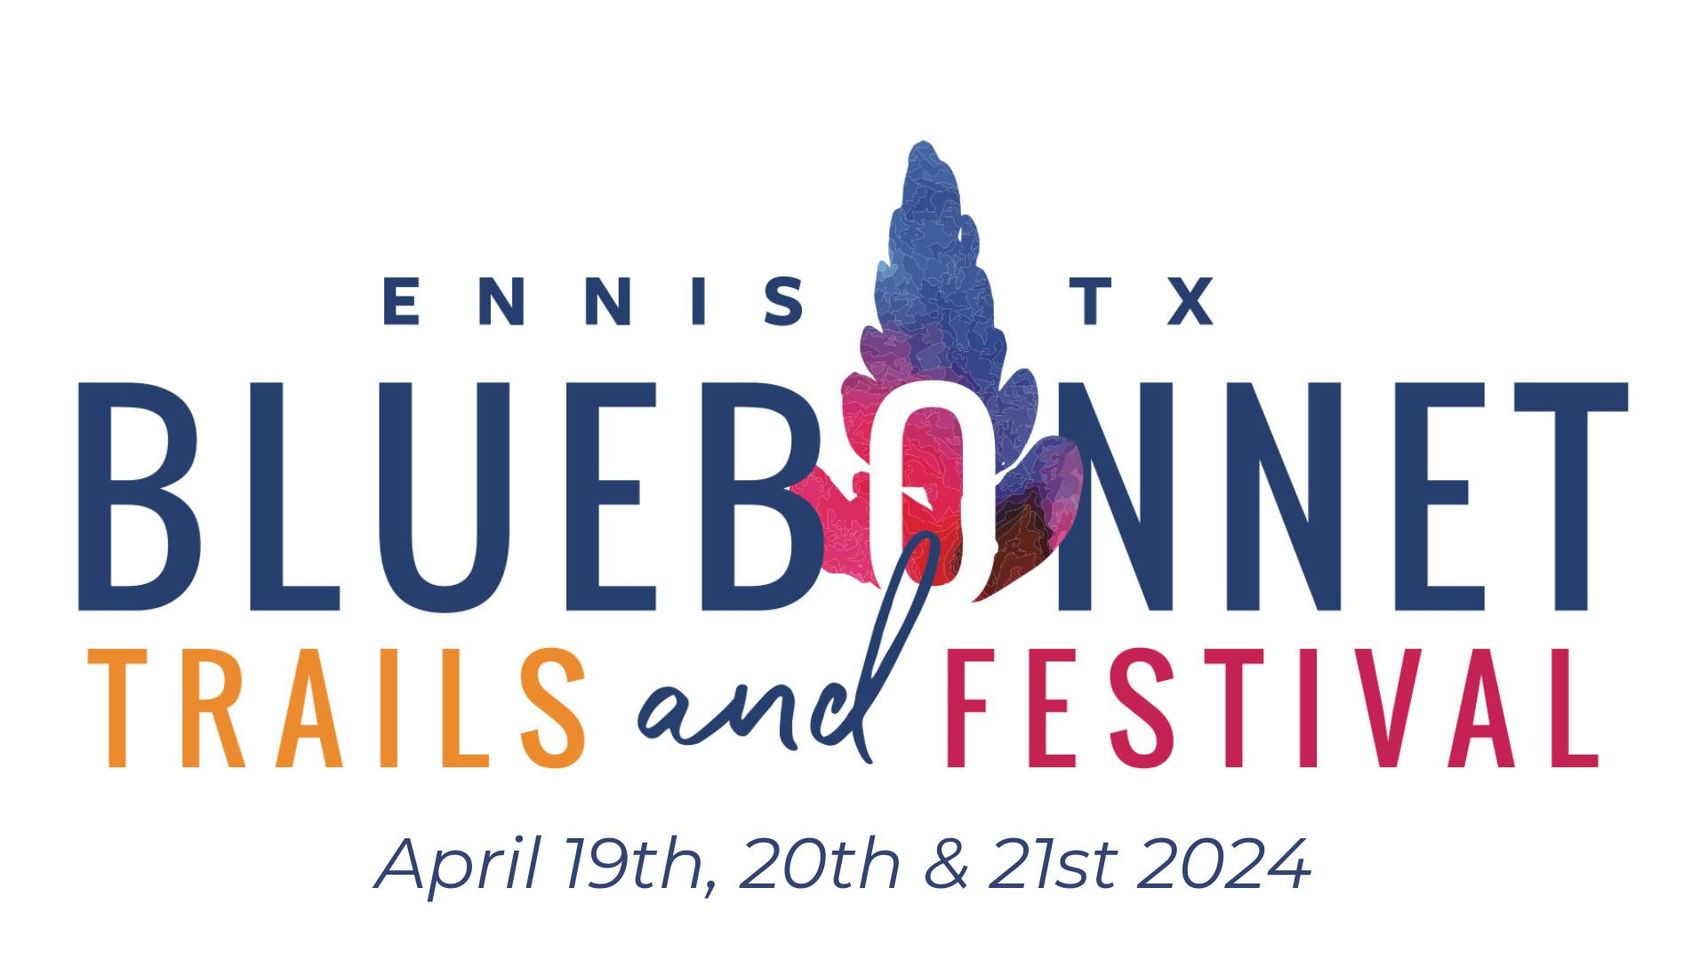 Ennis Bluebonnet Trails and Festival 1 bluebonnet festival ennis cedarcreeklake.online